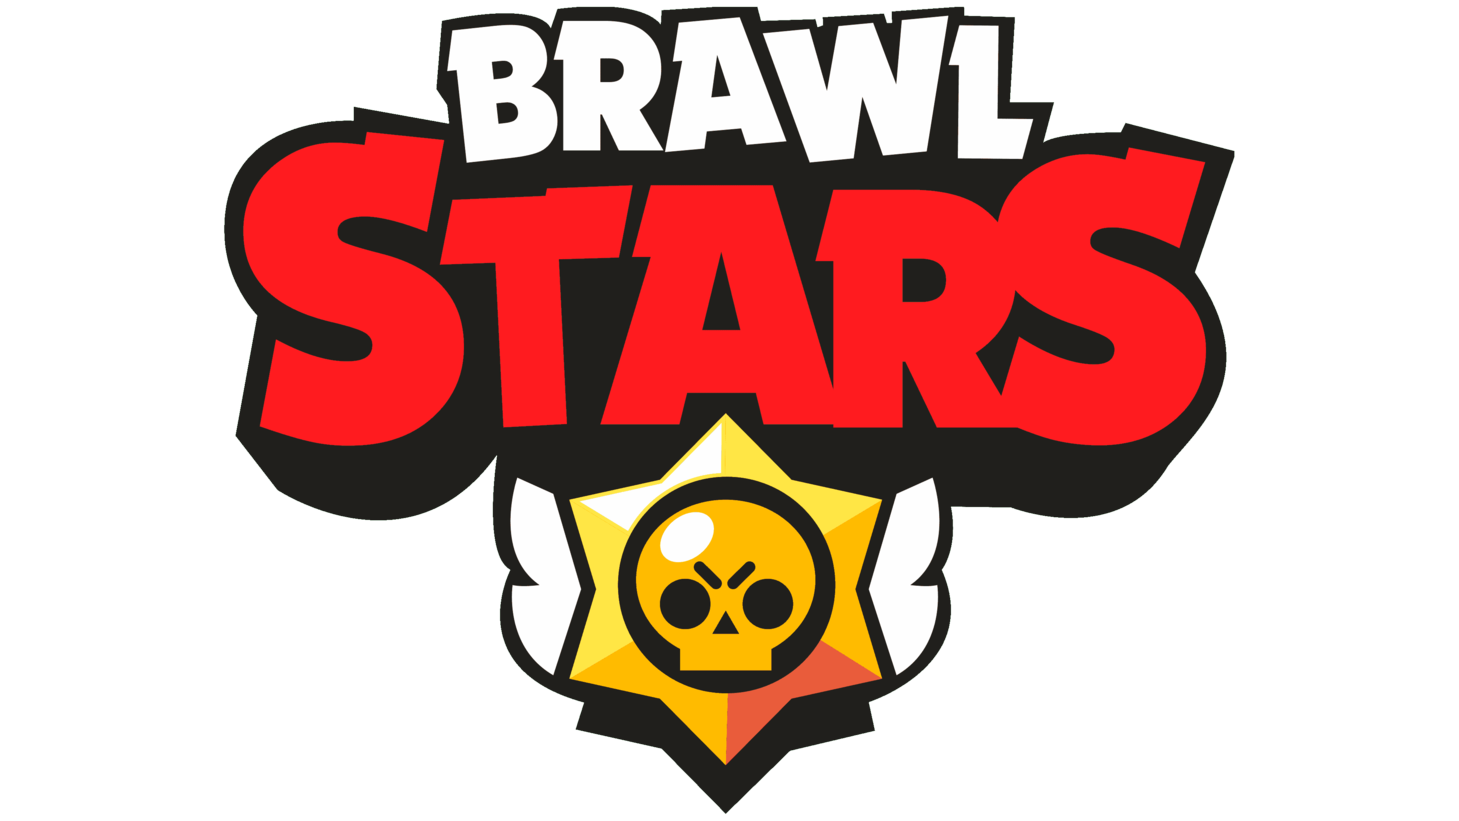 Brawl stars sign 2018 present